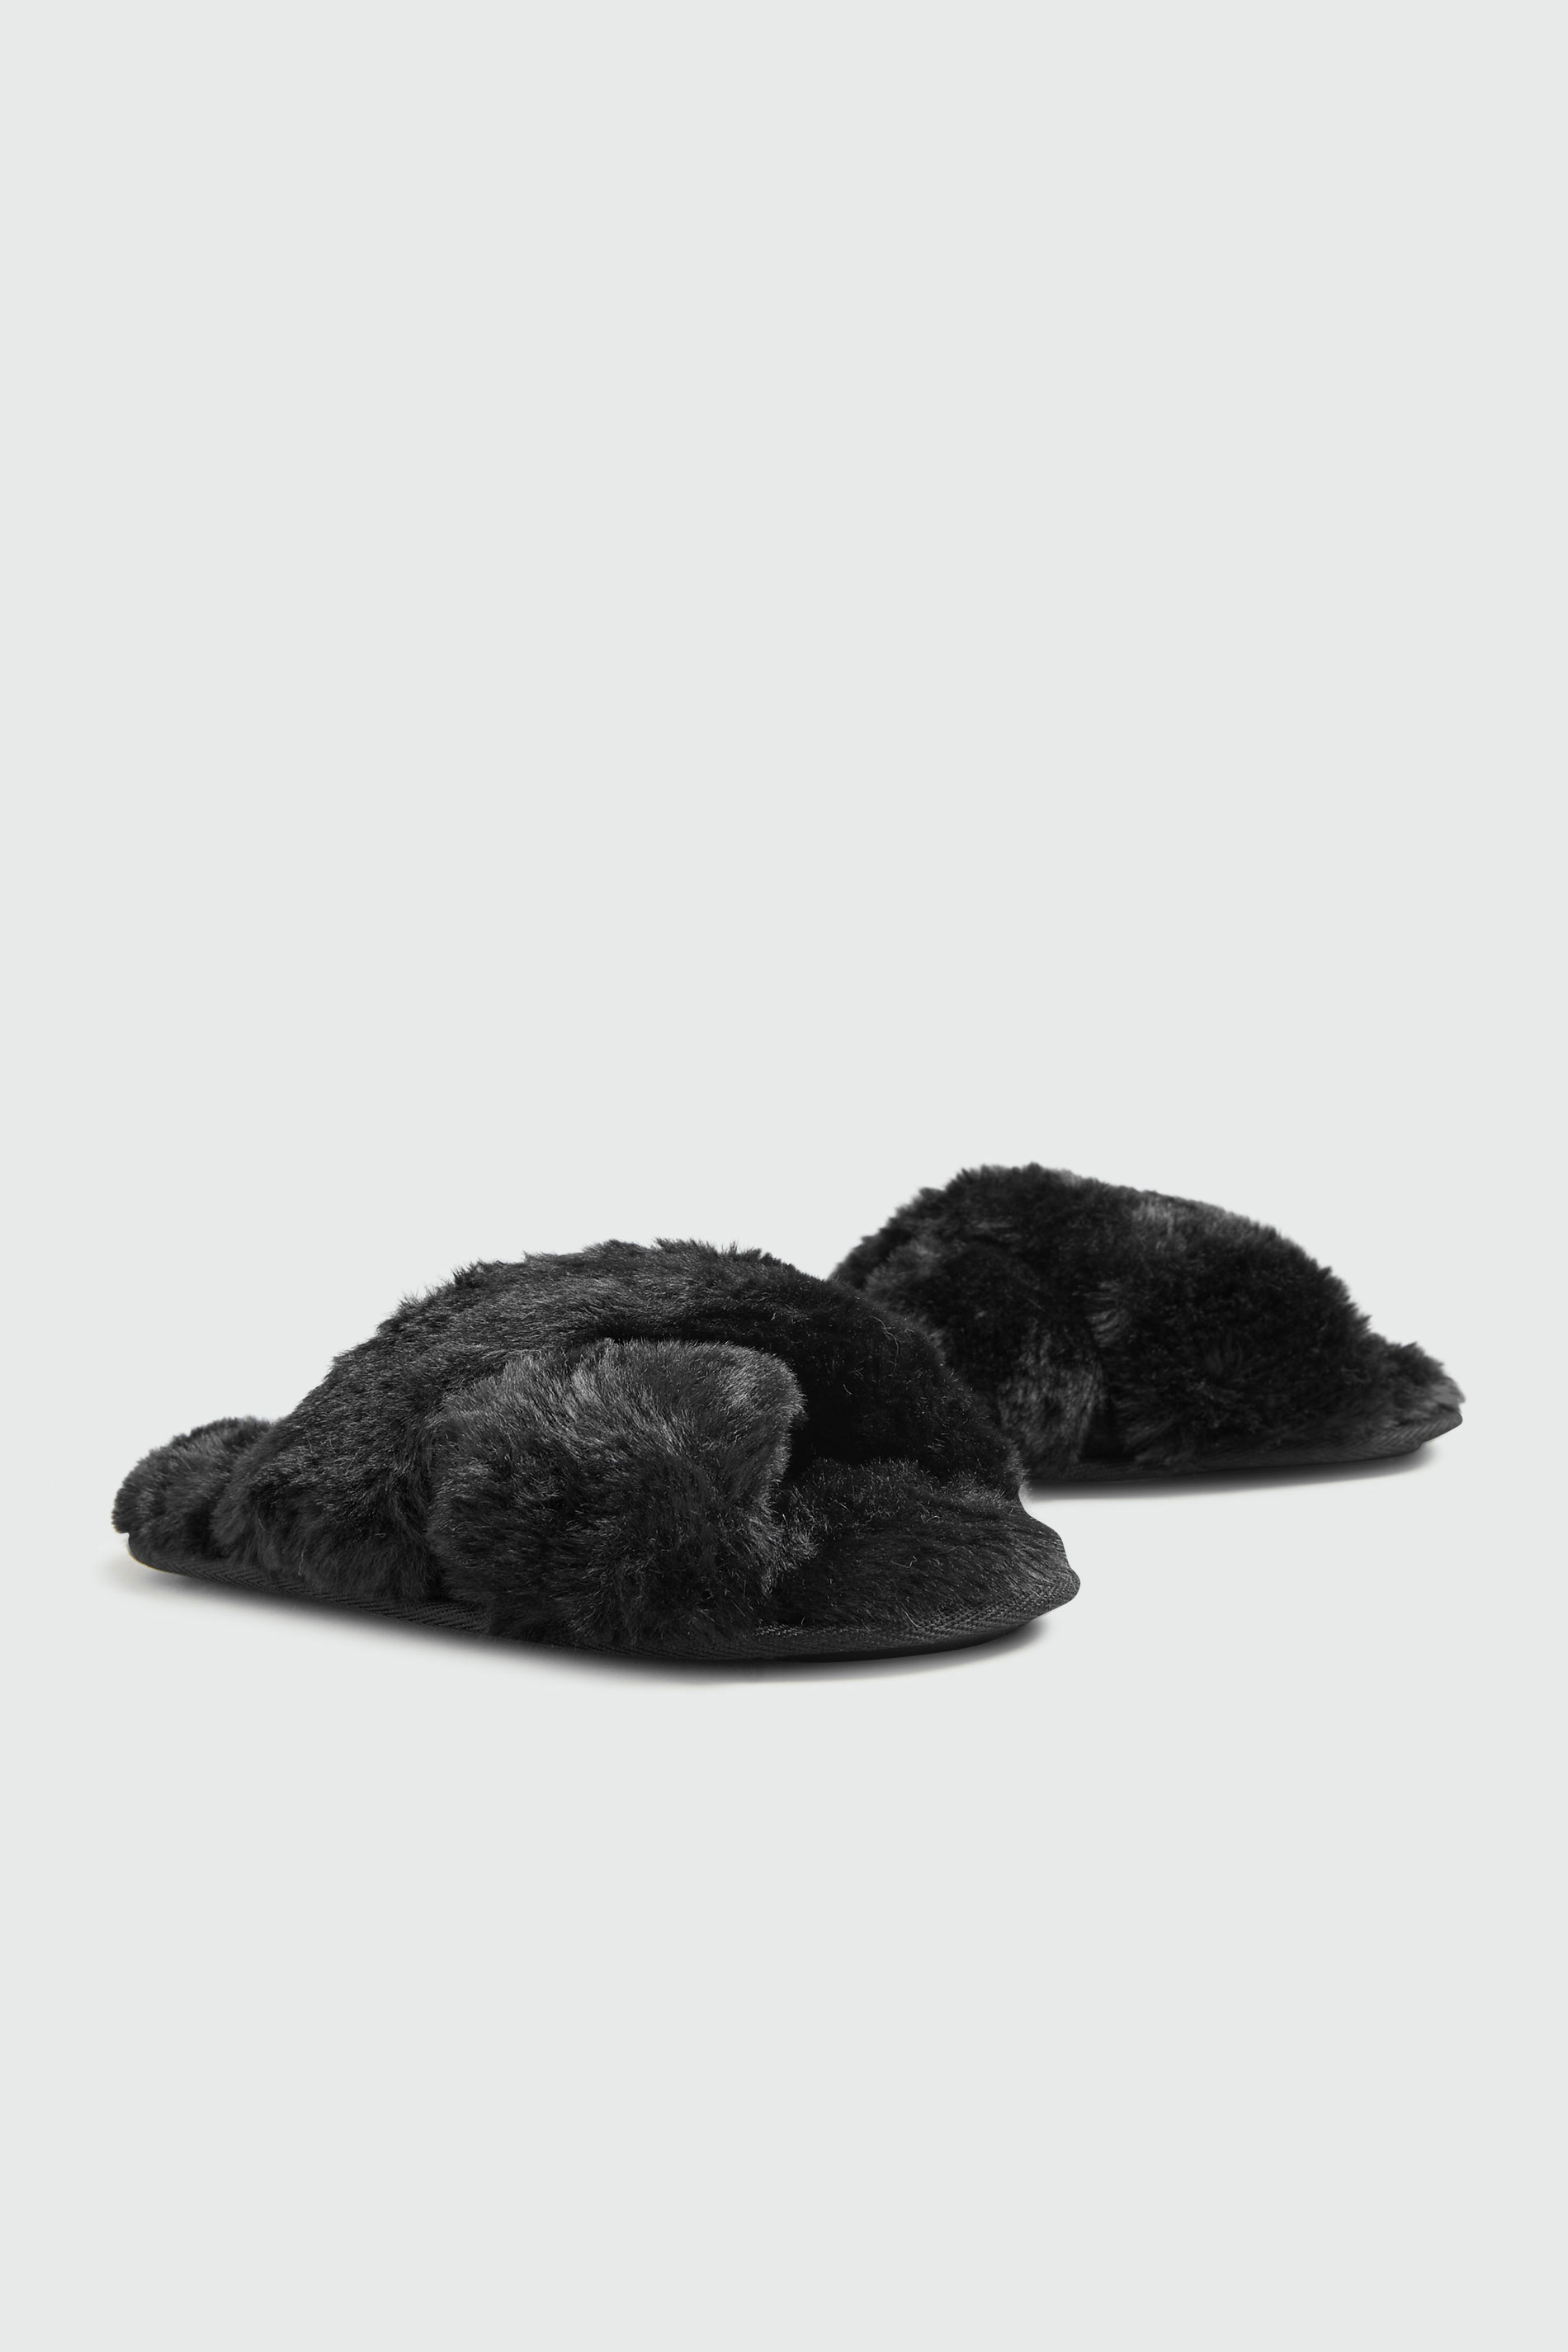 LTS Black Faux Fur Cross Strap Slippers_C.jpg